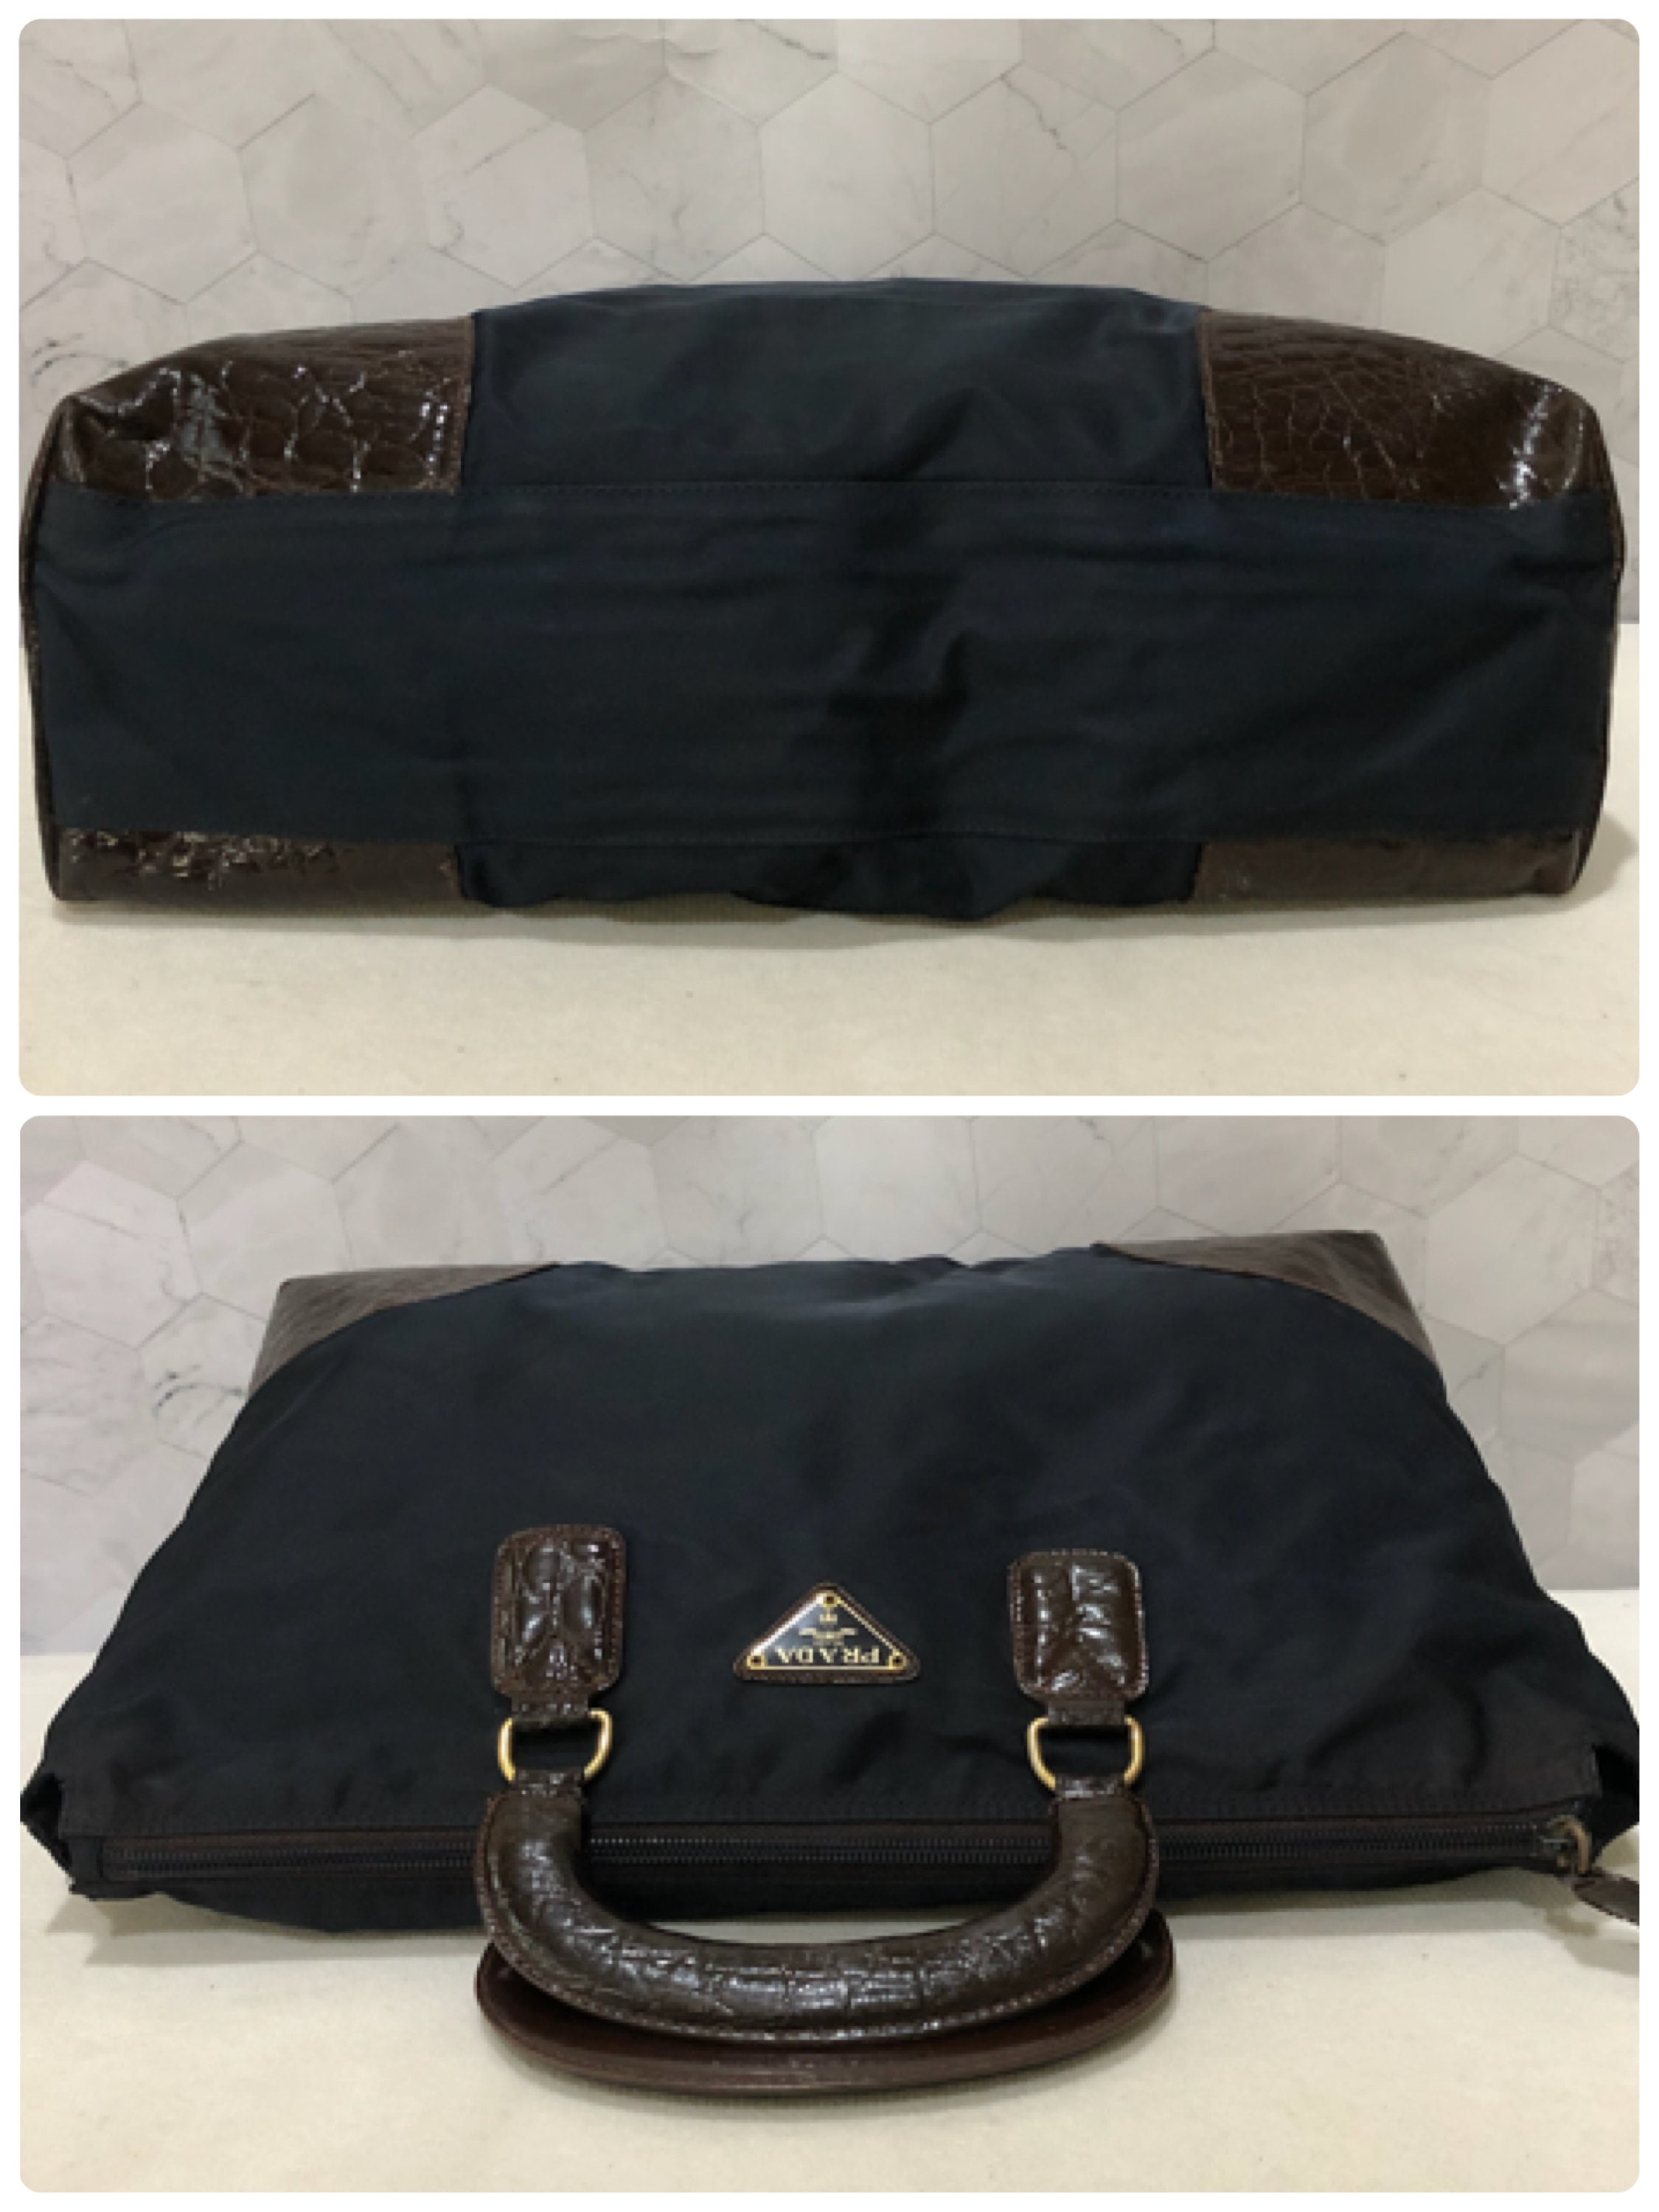 Prada Large Handbag Authentic Navy Blue Nylon Brown Leather 